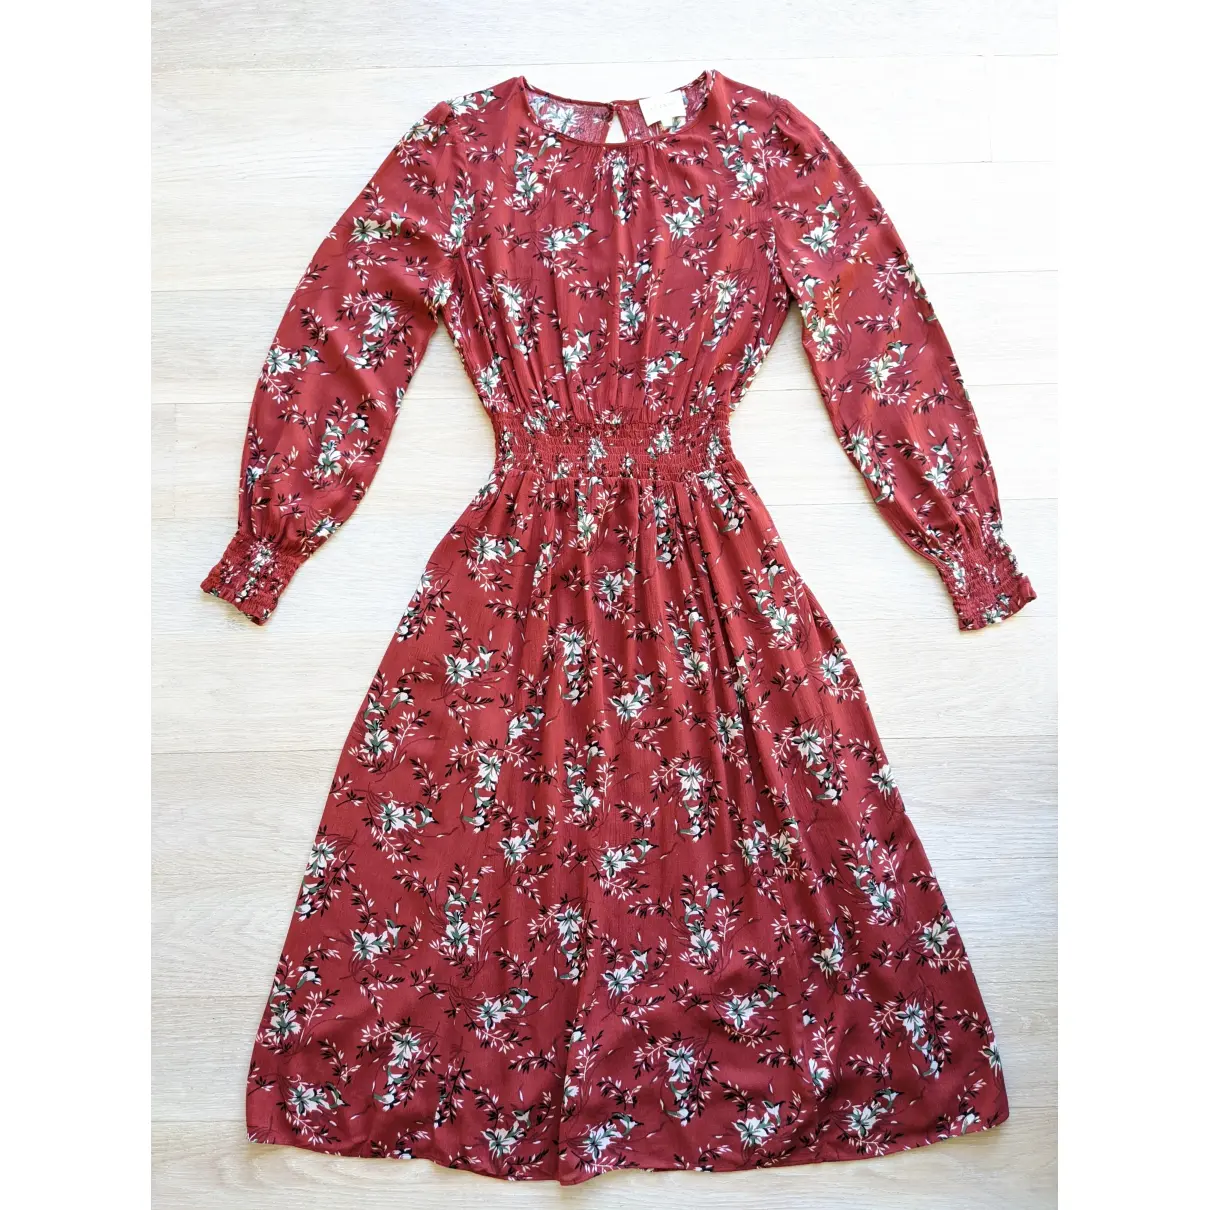 Buy Sézane Mid-length dress online